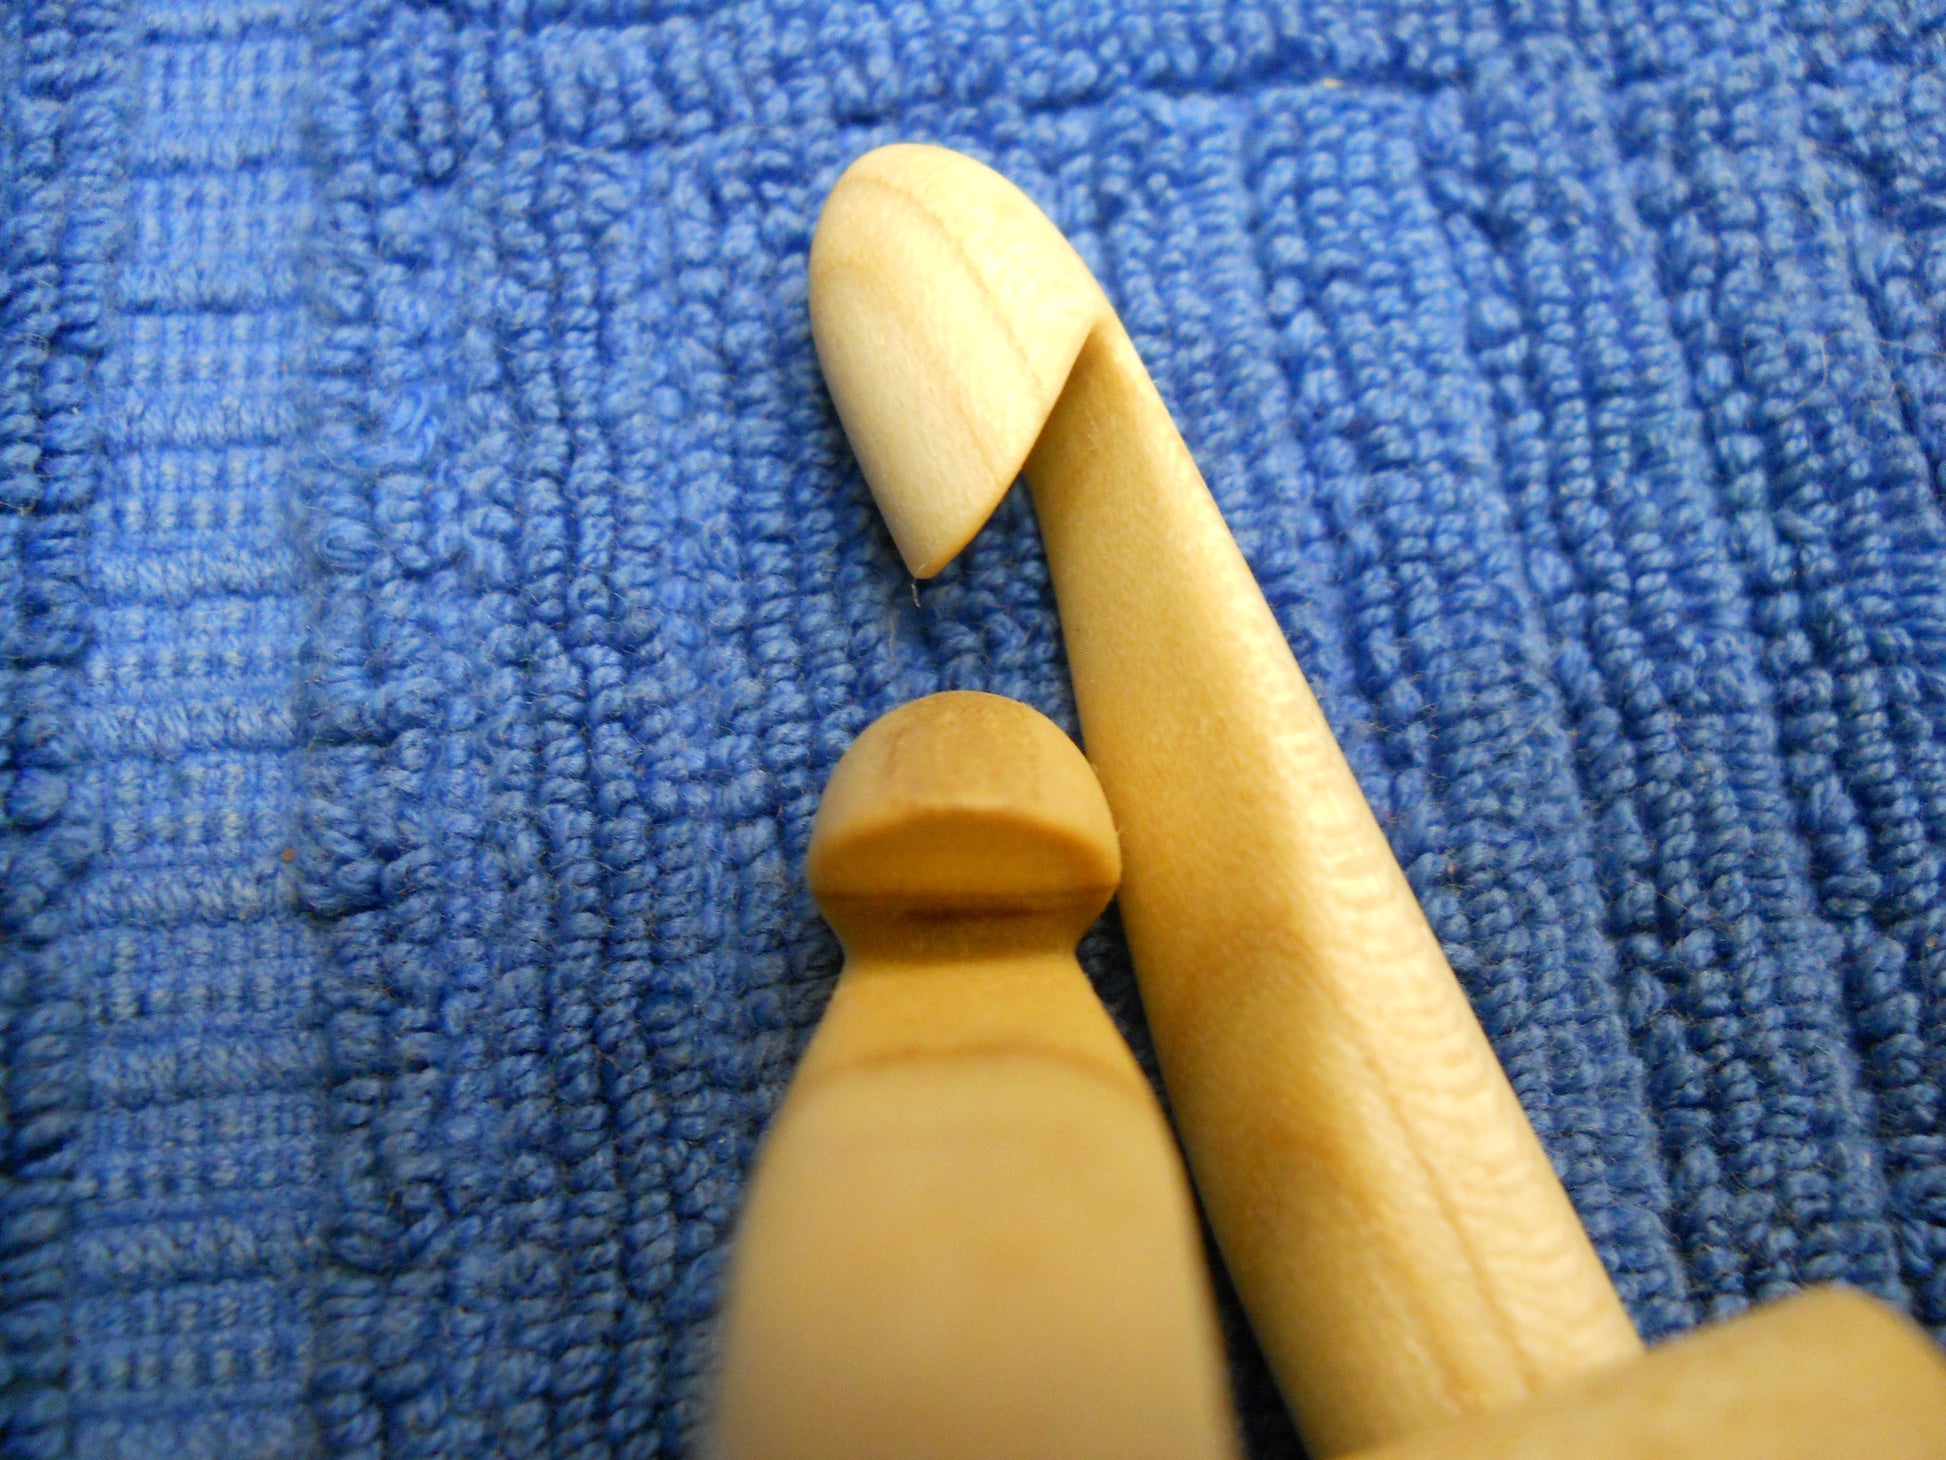 Giant Crochet Hook - Size U 25mm - Handcrafted from Red Oak